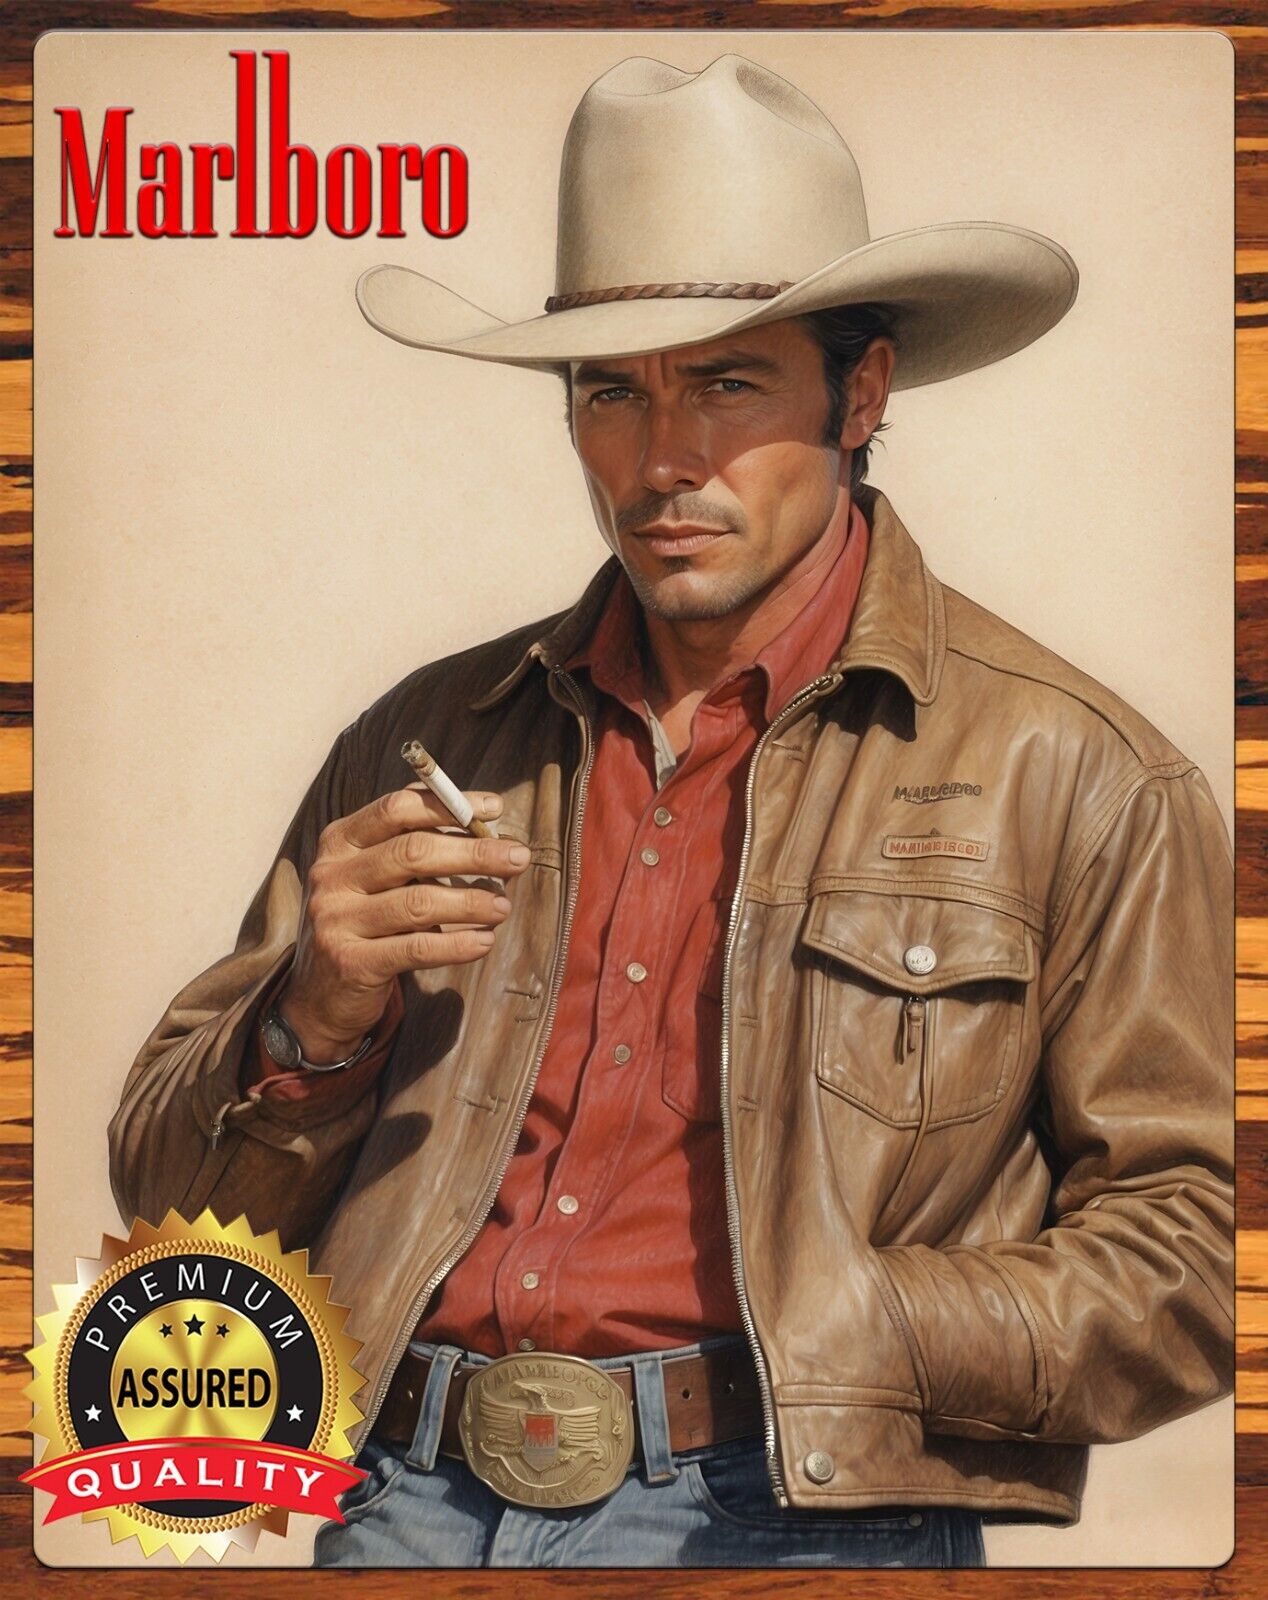 Marlboro Cigarettes - The Marlboro Man - 1970s - Restored - Metal Sign 11 x 14